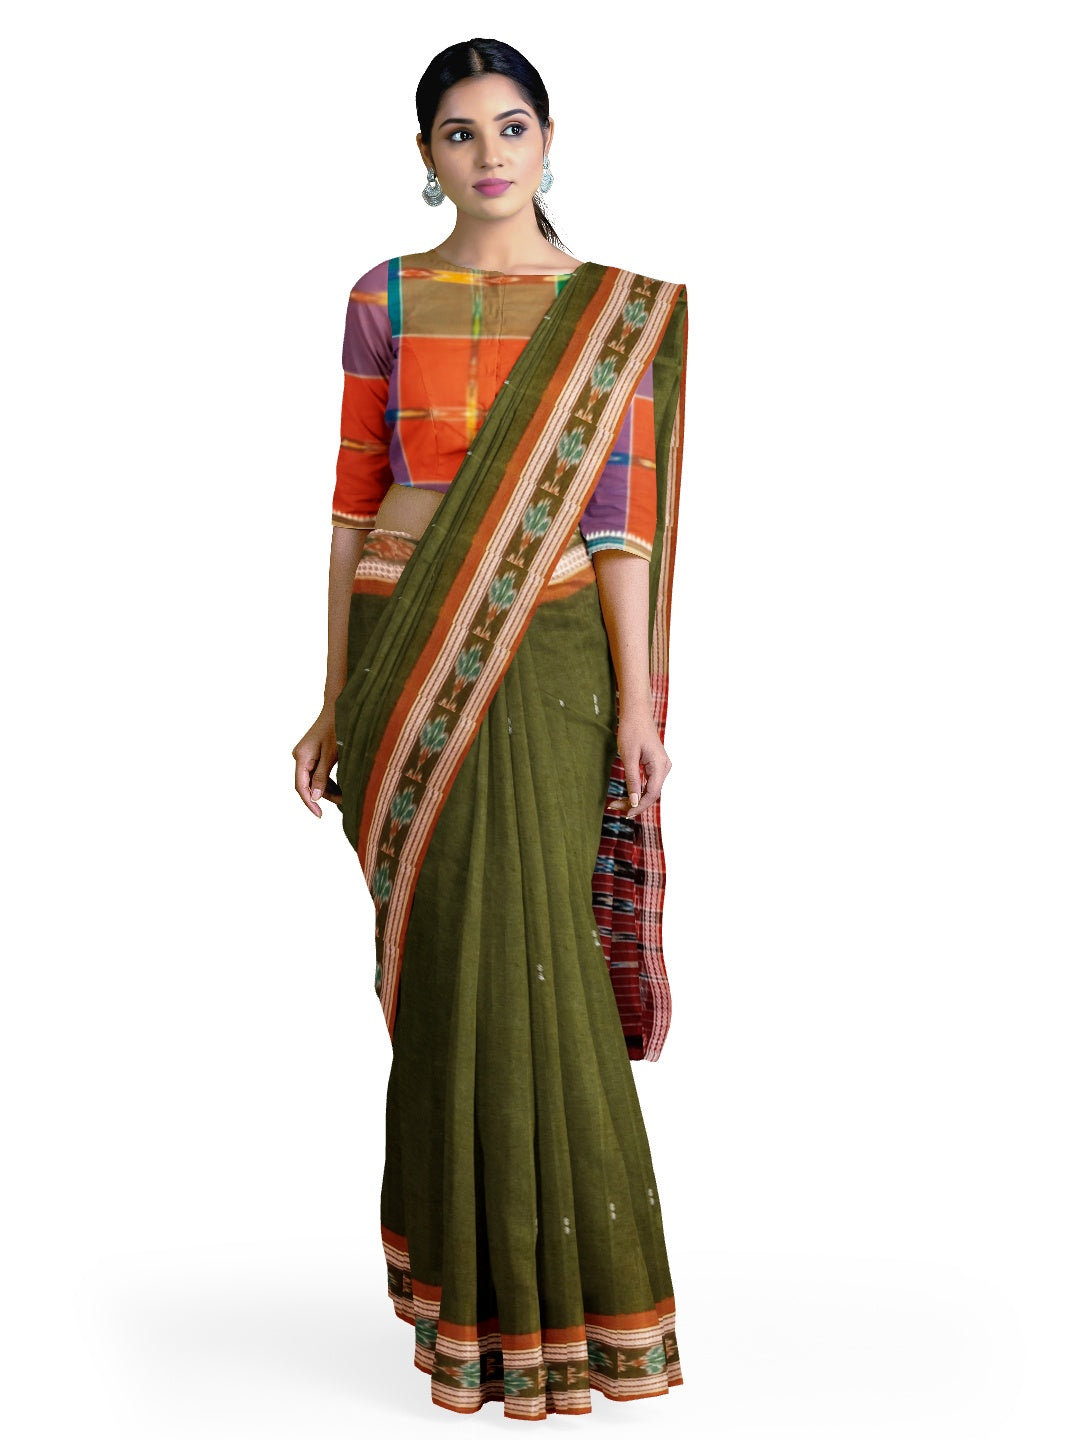 OliveGreen Odisha Ikat saree  with mix match cotton ikat blouse